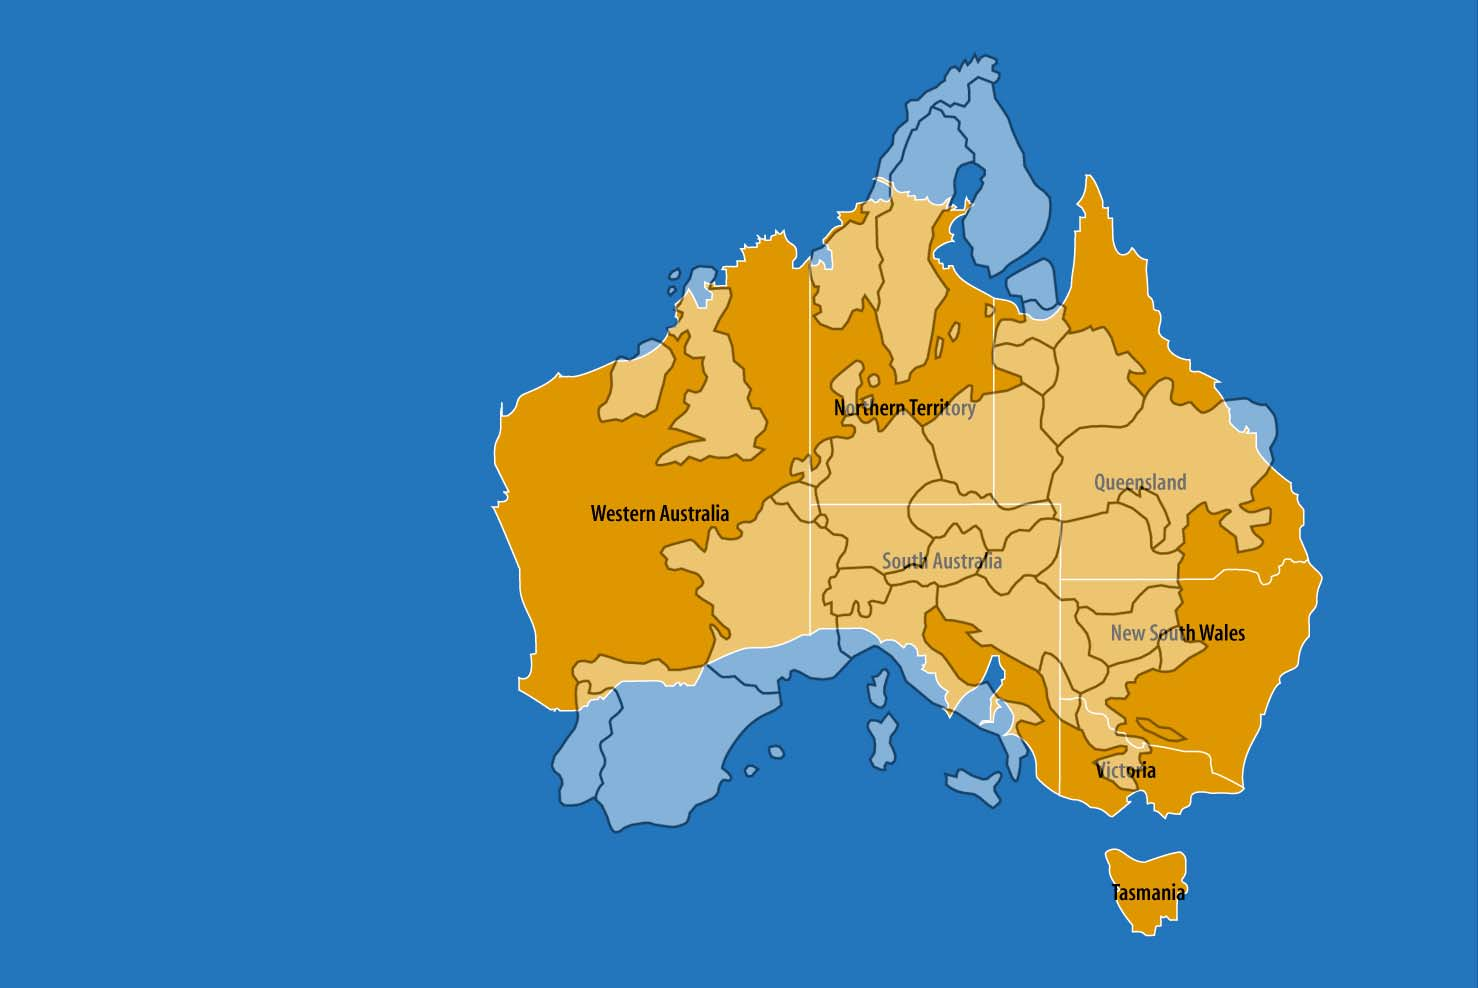 Australien als Studien- und Reisedomizil Australien und Multikulturelle Europa Gesellschaft Australien Bevölkerung: 20 Millionen Fläche: 7,713,000 km 2 Europa Bevölkerung: 314.